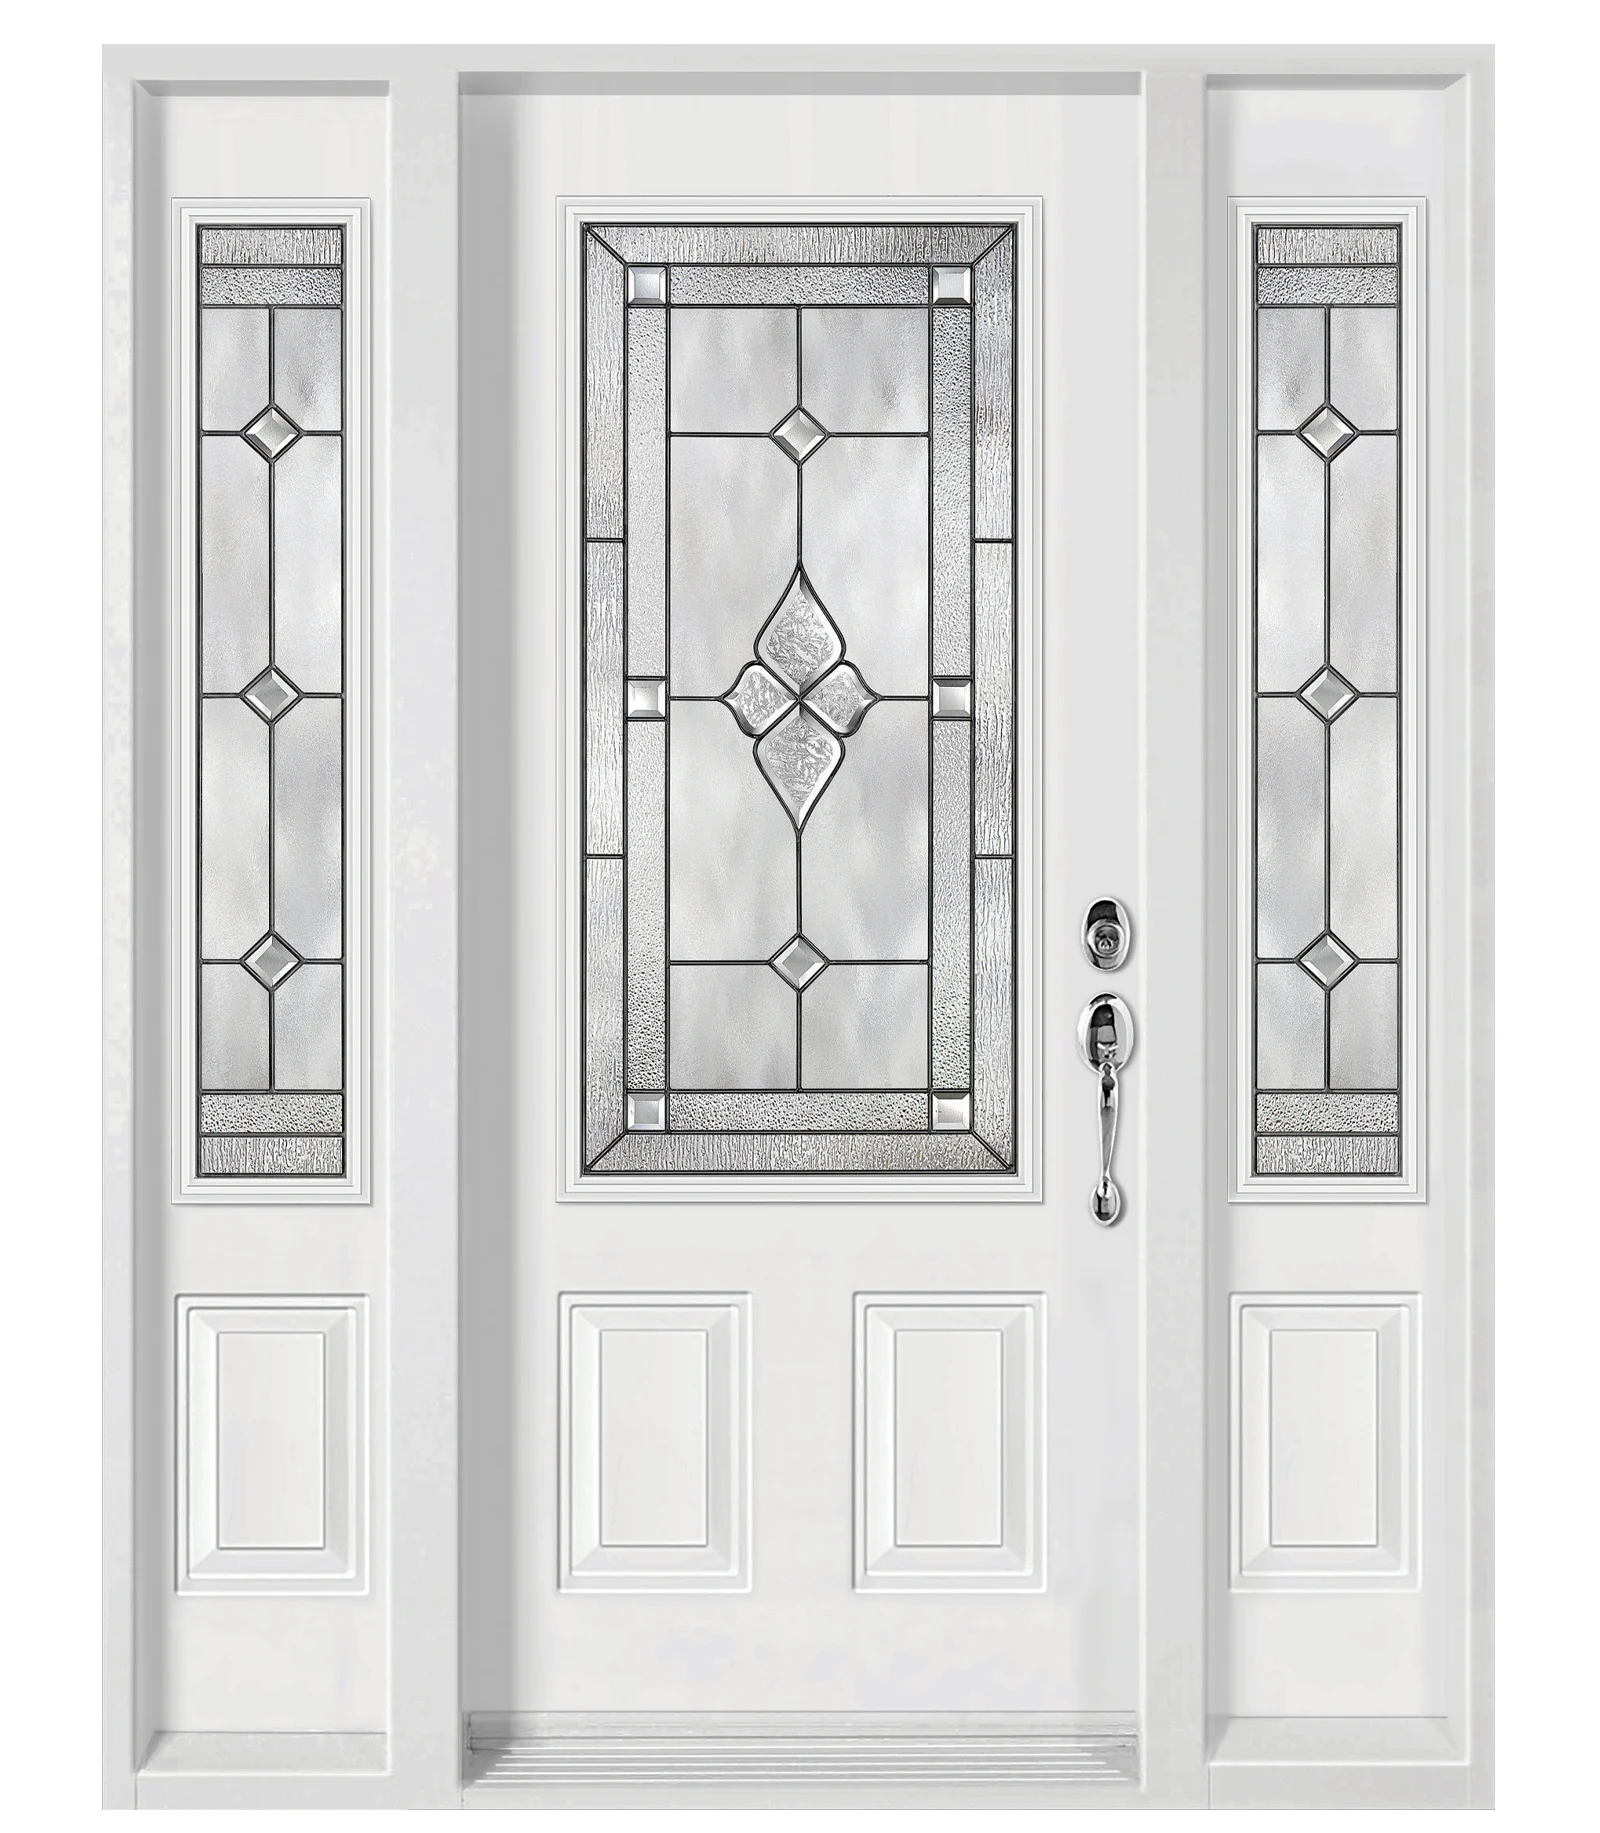 A fibreglass entry door 